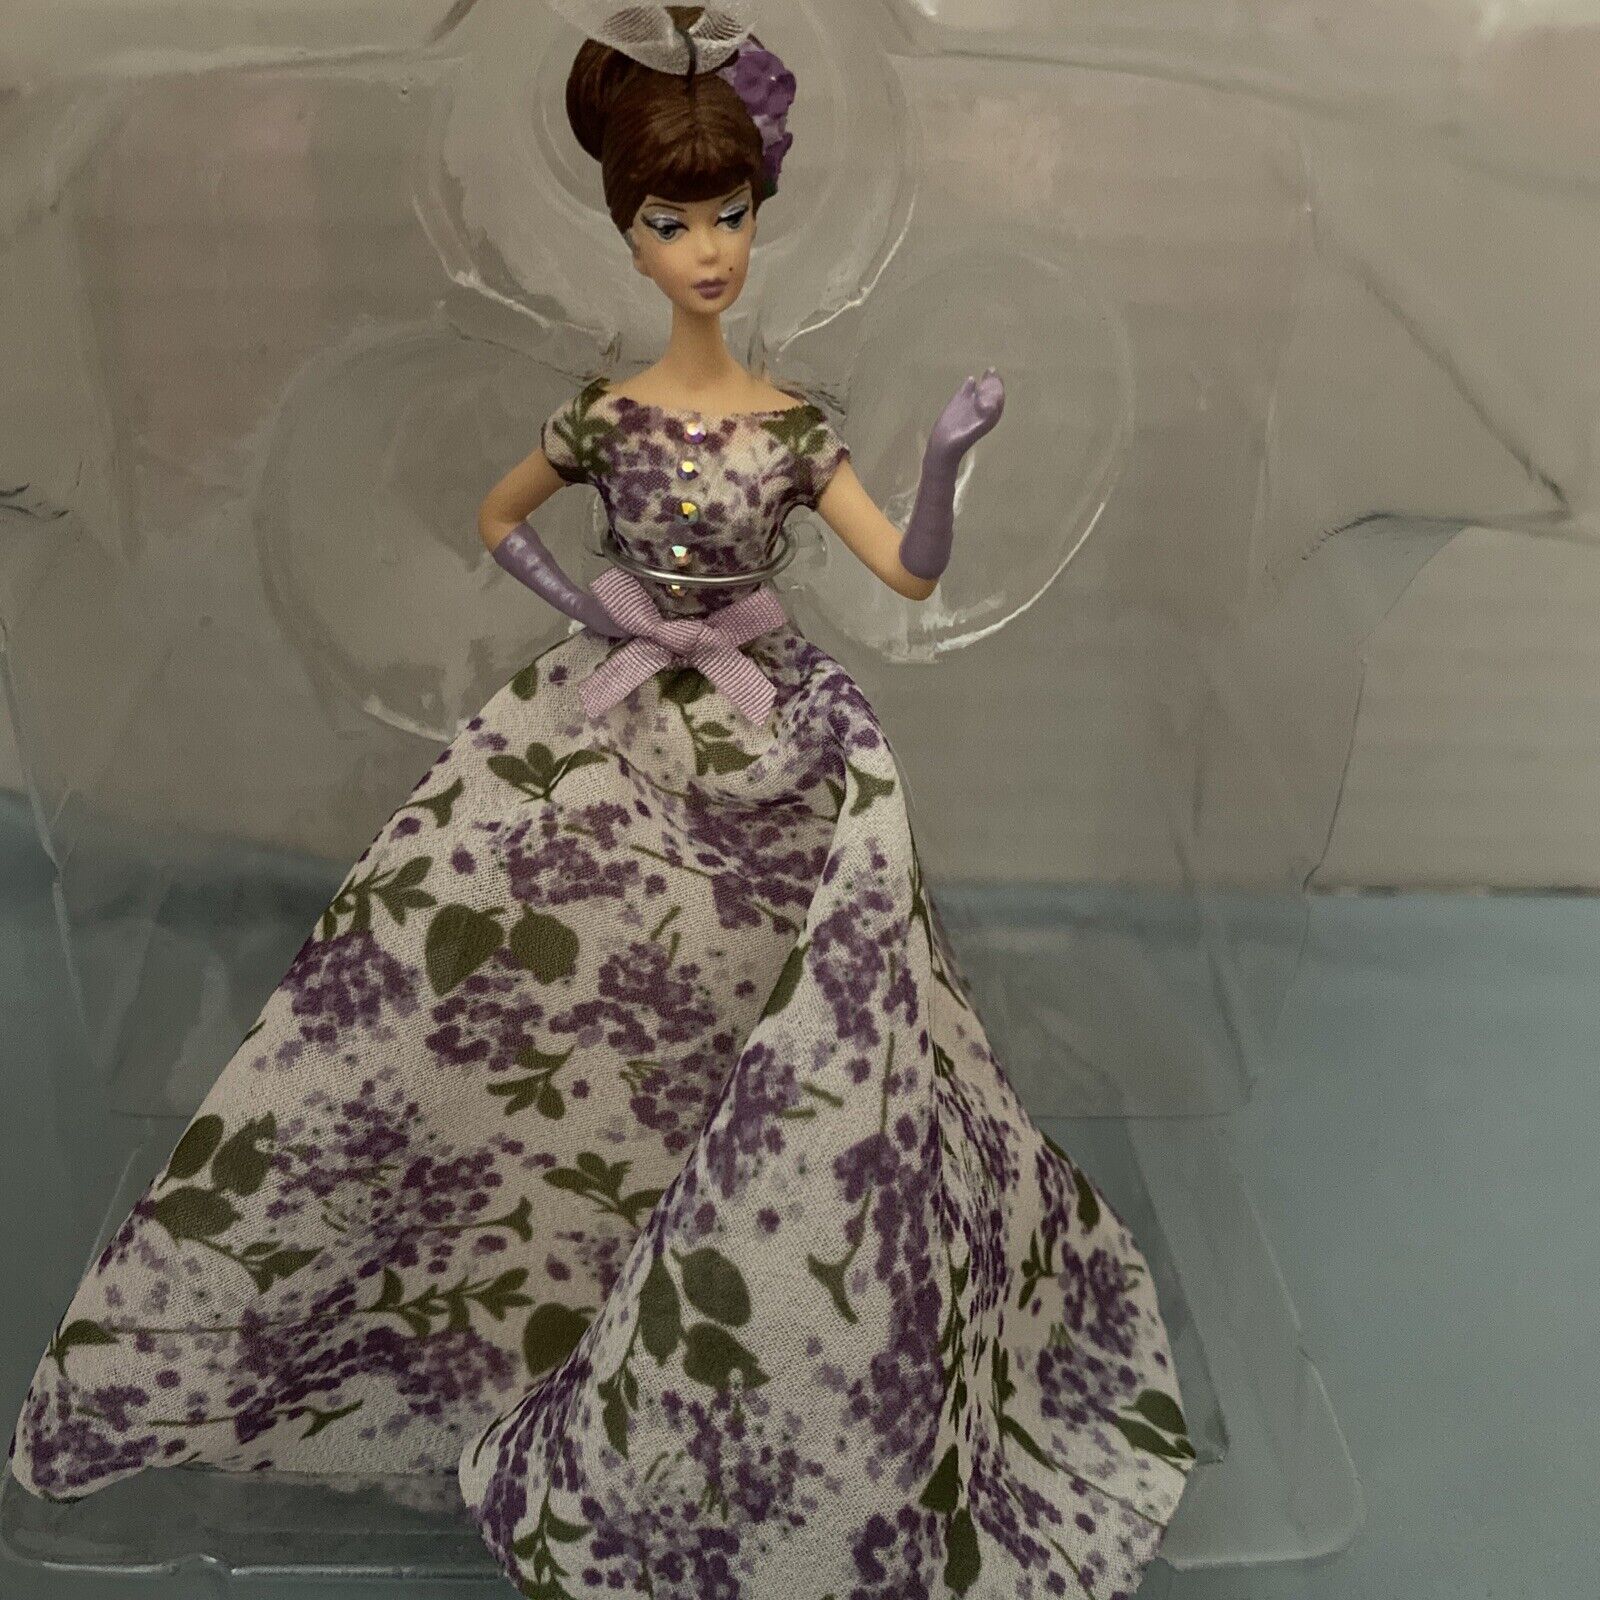 2020 Hallmark Violette Barbie Porcelain and Fabric Keepsake Ornament